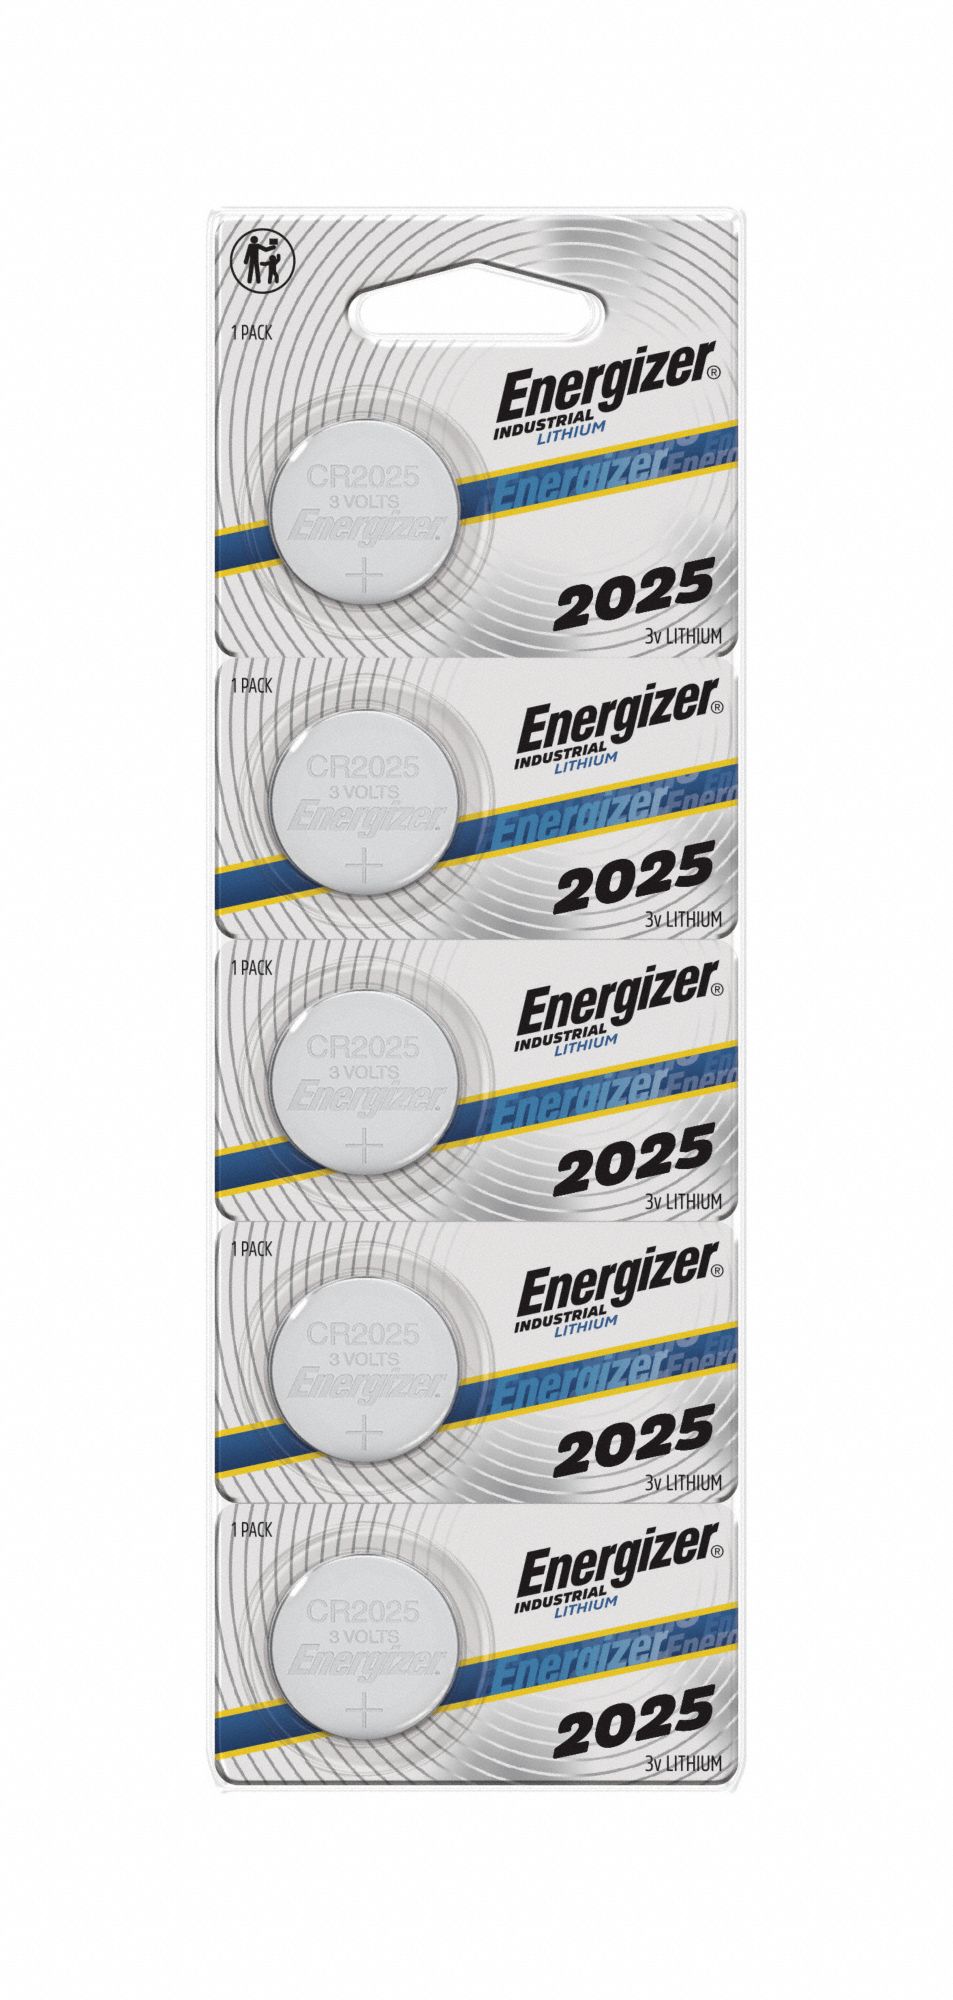 Energizer CR2025 Battery 3V Lithium - 2 Batteries 